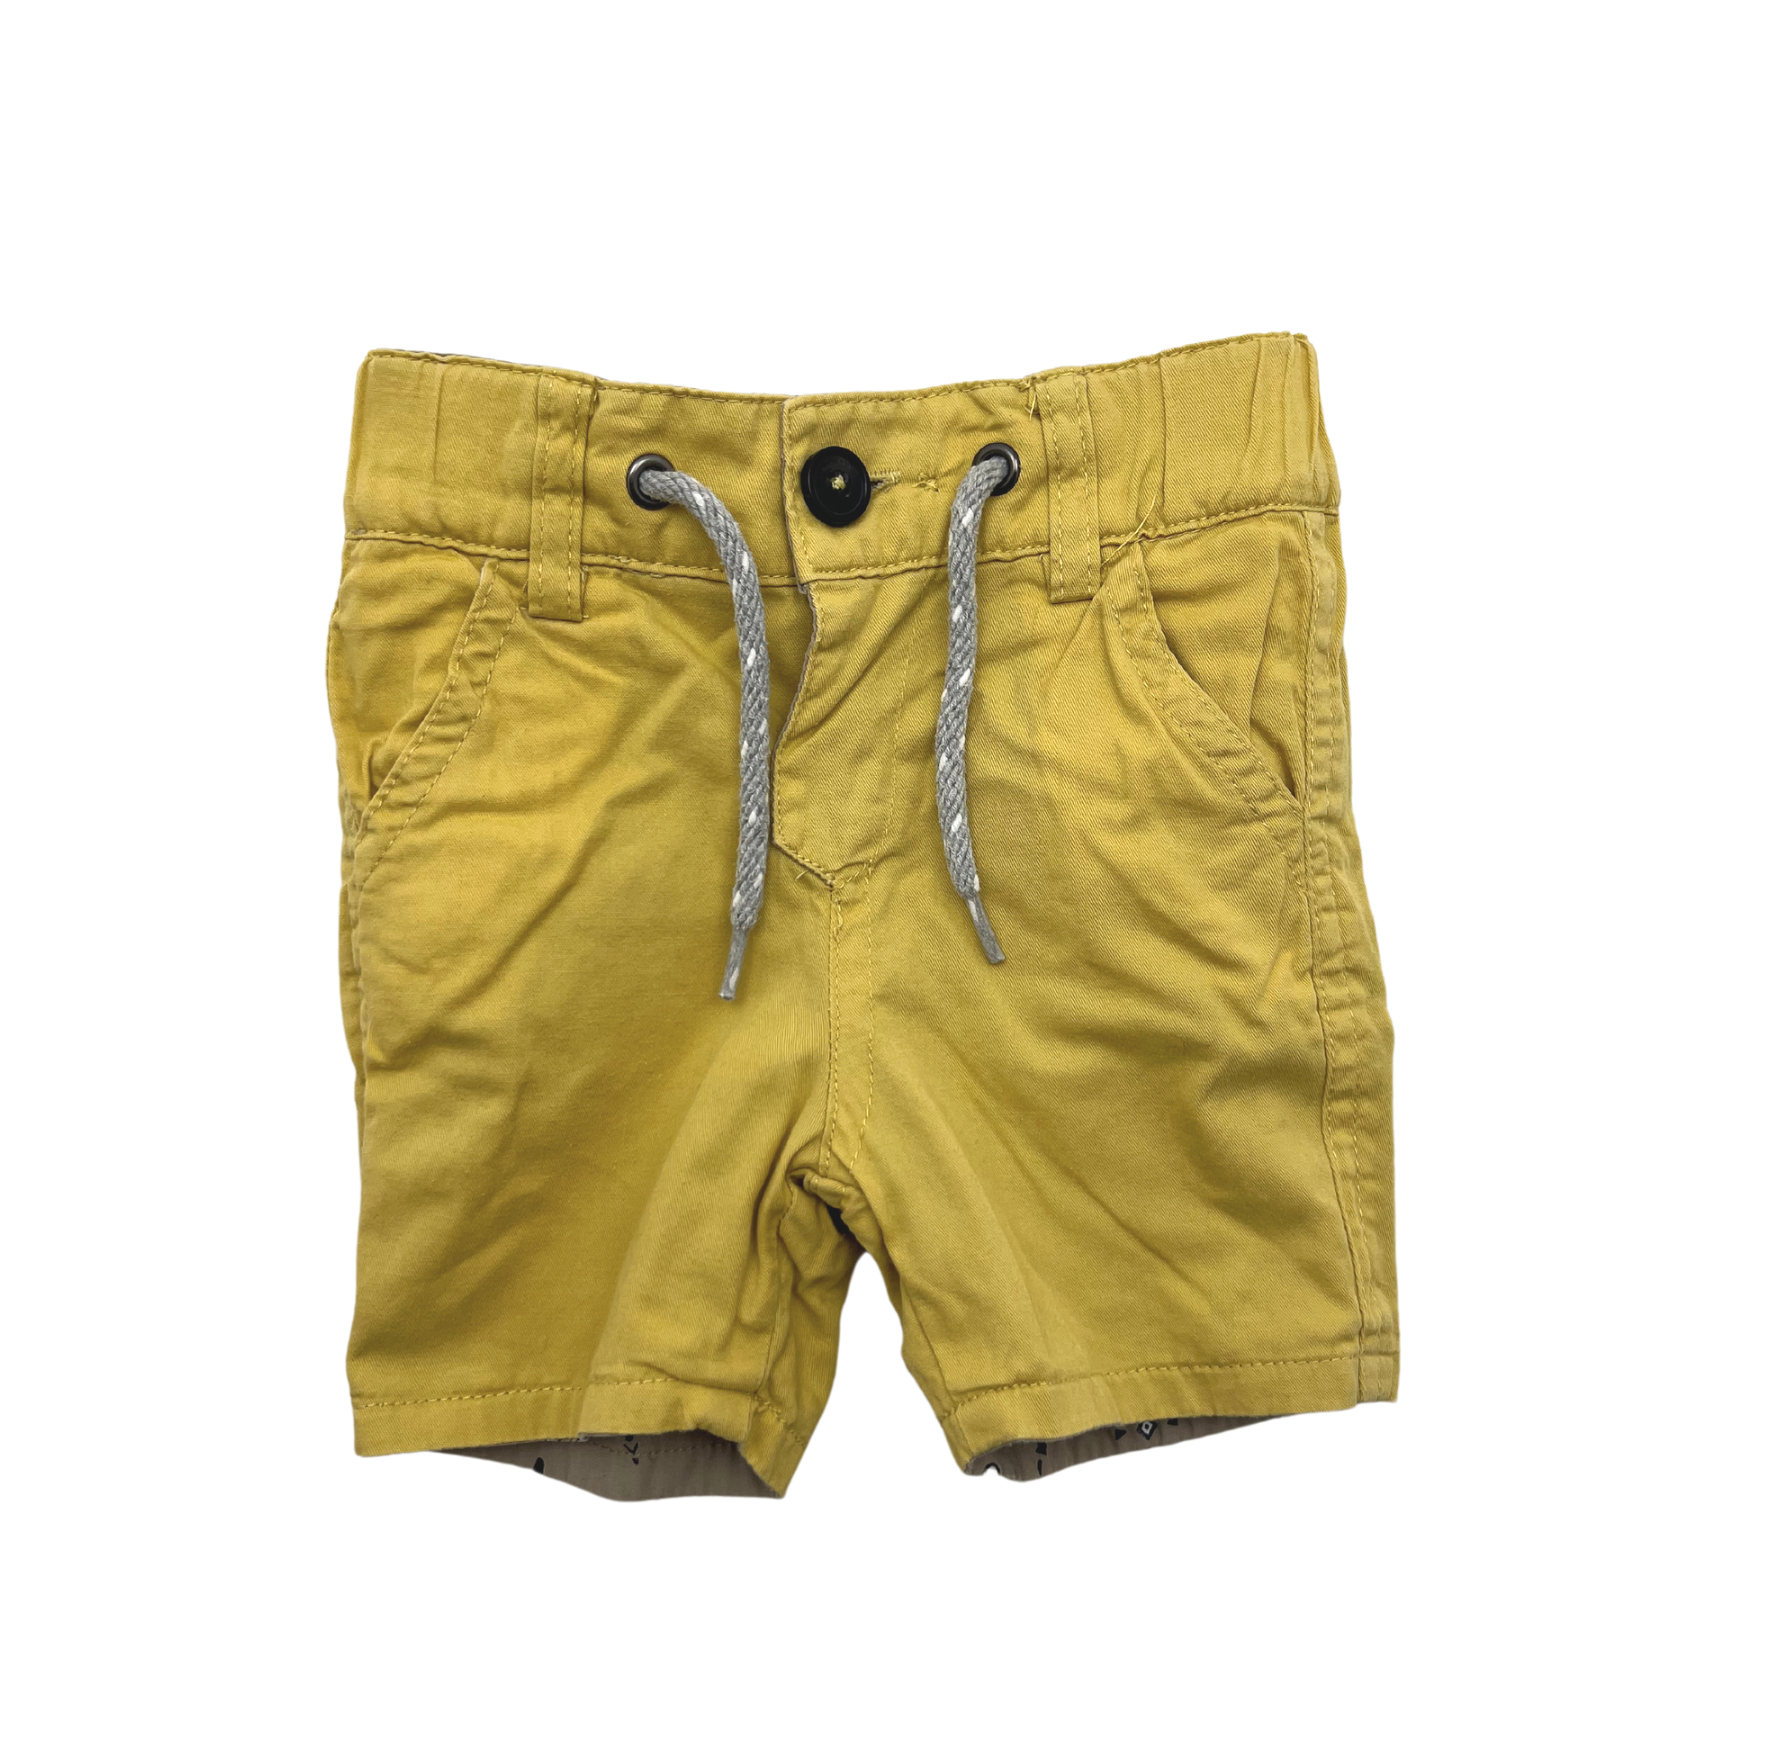 IKKS - Yellow/Beige Reversible Bermuda Shorts with Cactus - 3 months